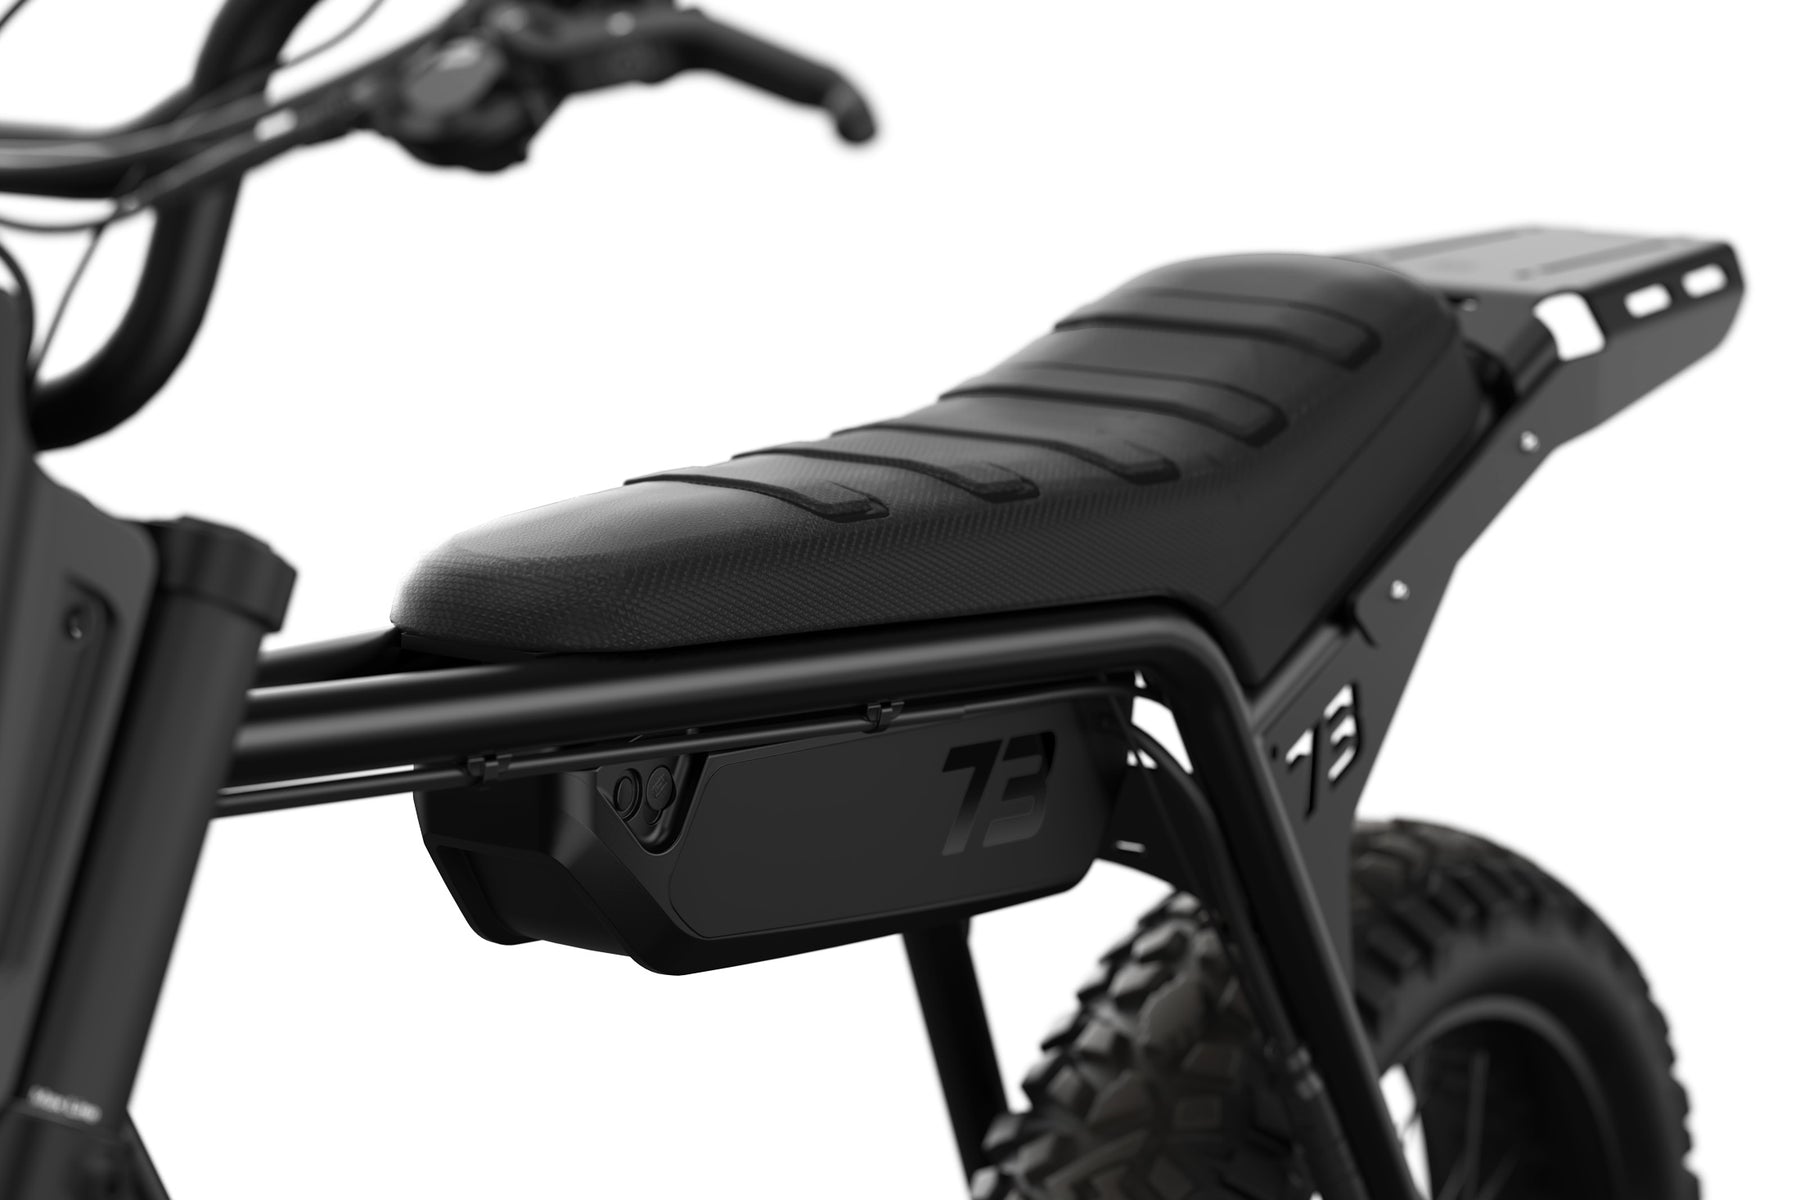 Detail shot of the removable battery on the SUPER73-Z Blackout SE bike.